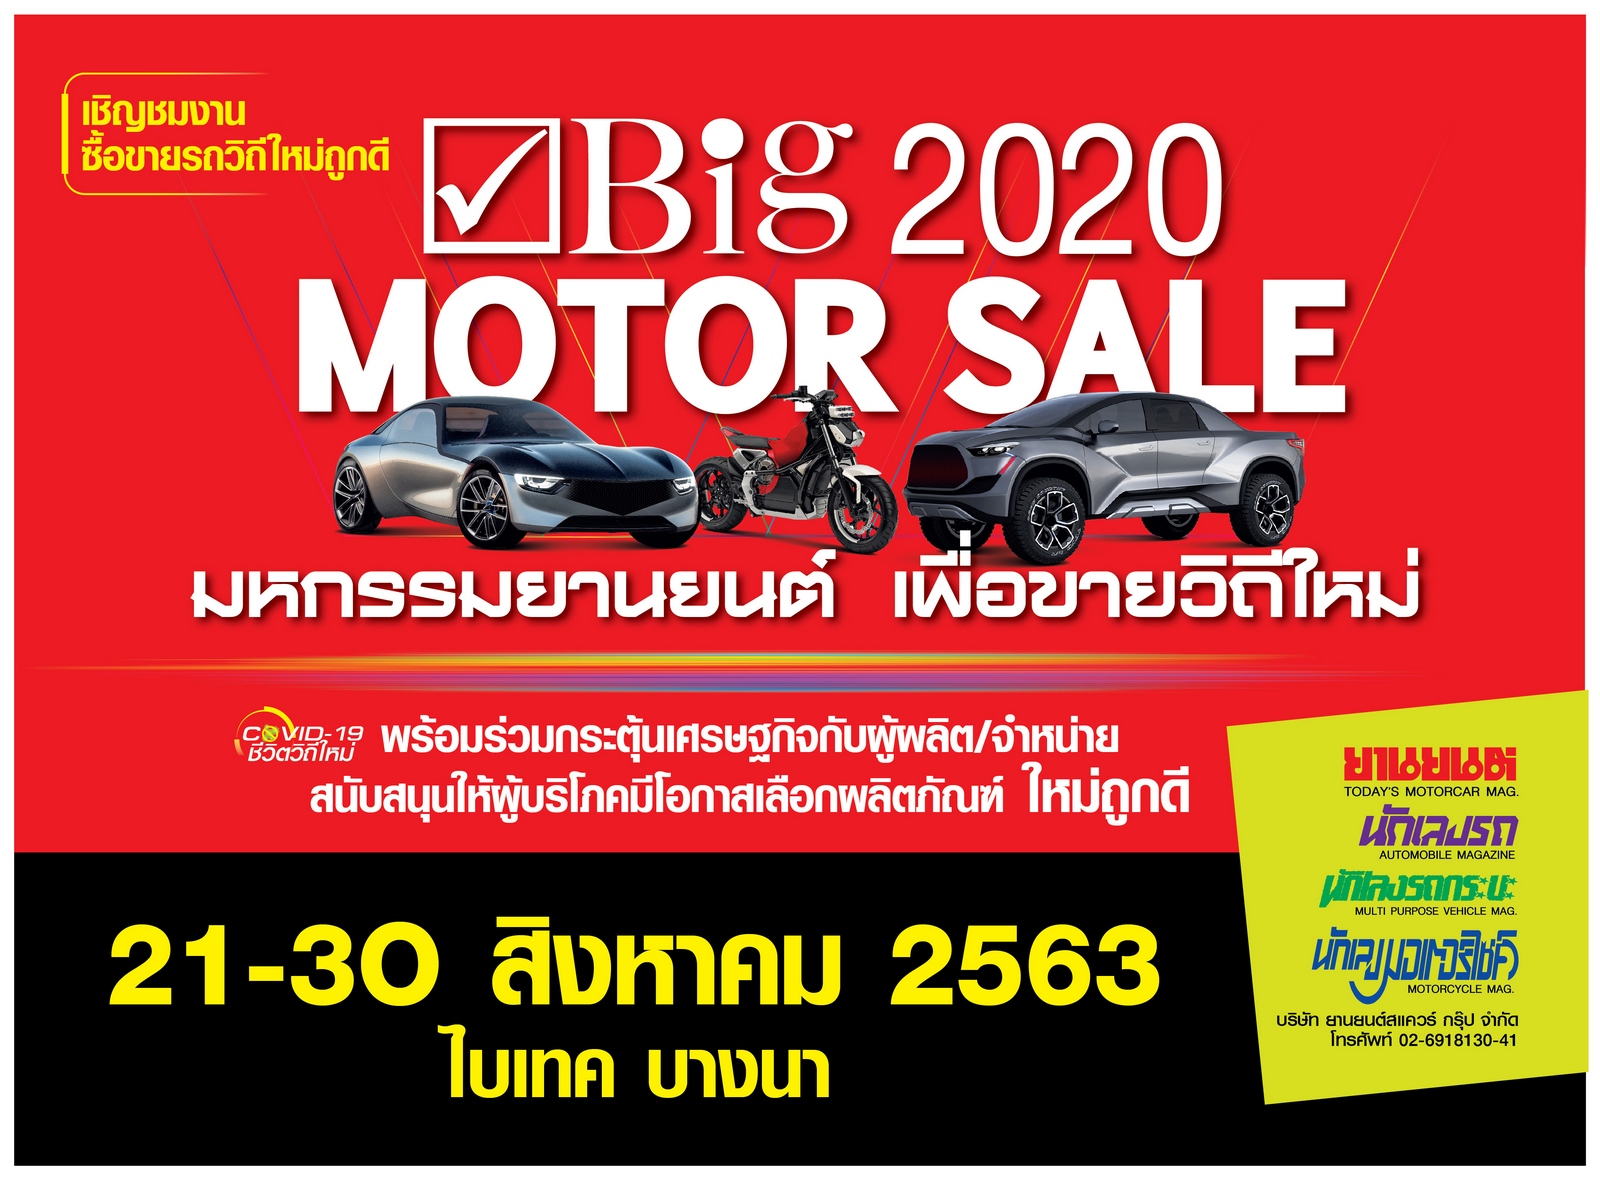 Big Motor Sale 2020 งานขายรถวิถีใหม่ จัดใหญ่กระหึ่มเมืองระดมโปรถูก แคมเปญเด็ด ช่วยขับเคลื่อนเศรษฐกิจไทย 21-30 สิงหาคมนี้ ที่ไบเทค